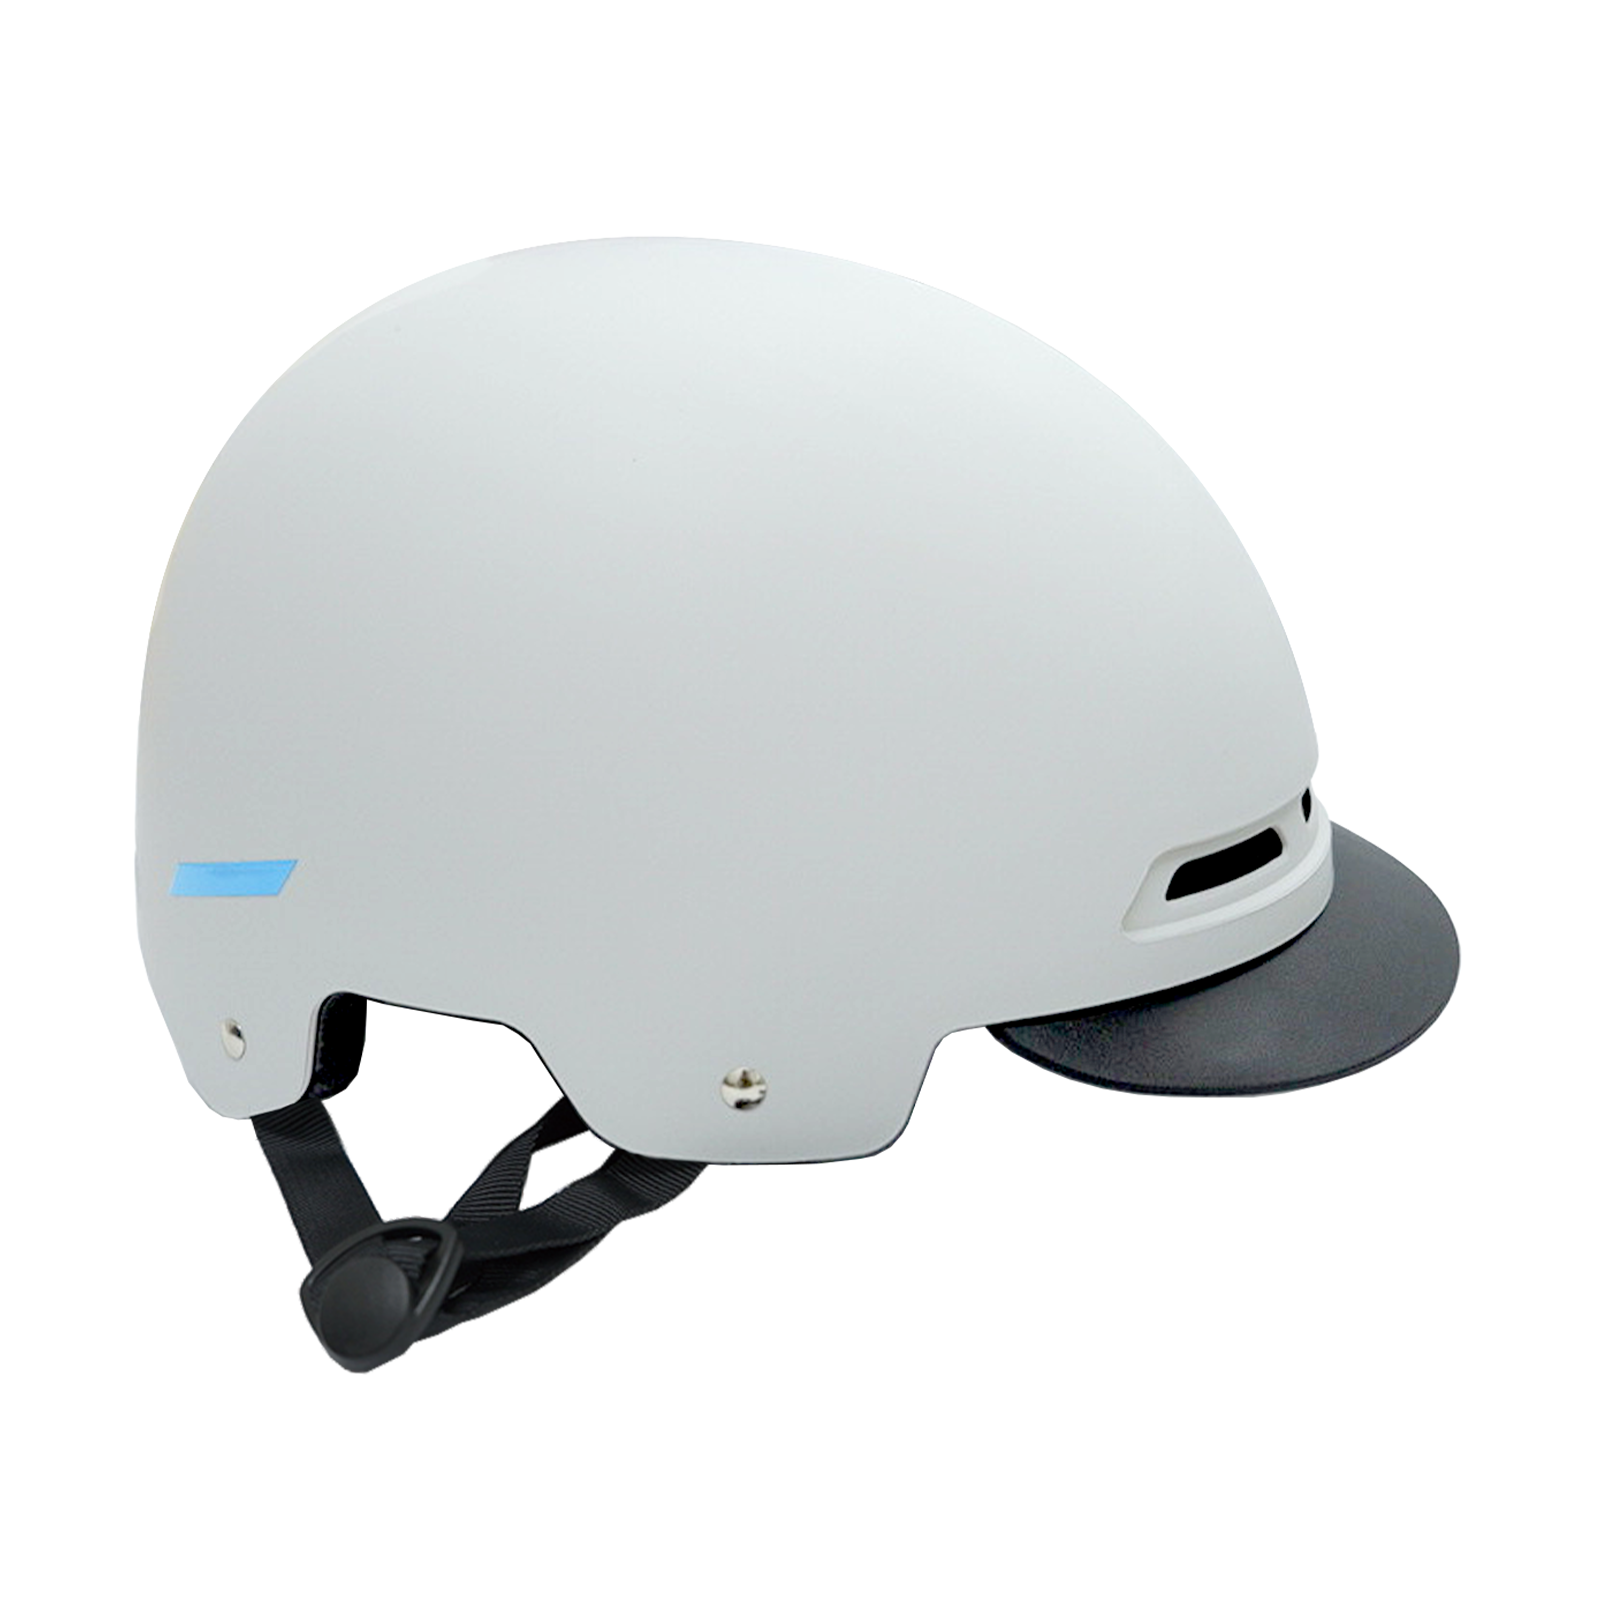 Daxys Street Helmet (Slate Gray), Daxys Head Light 1200LM & Daxys Phone Holder bundle